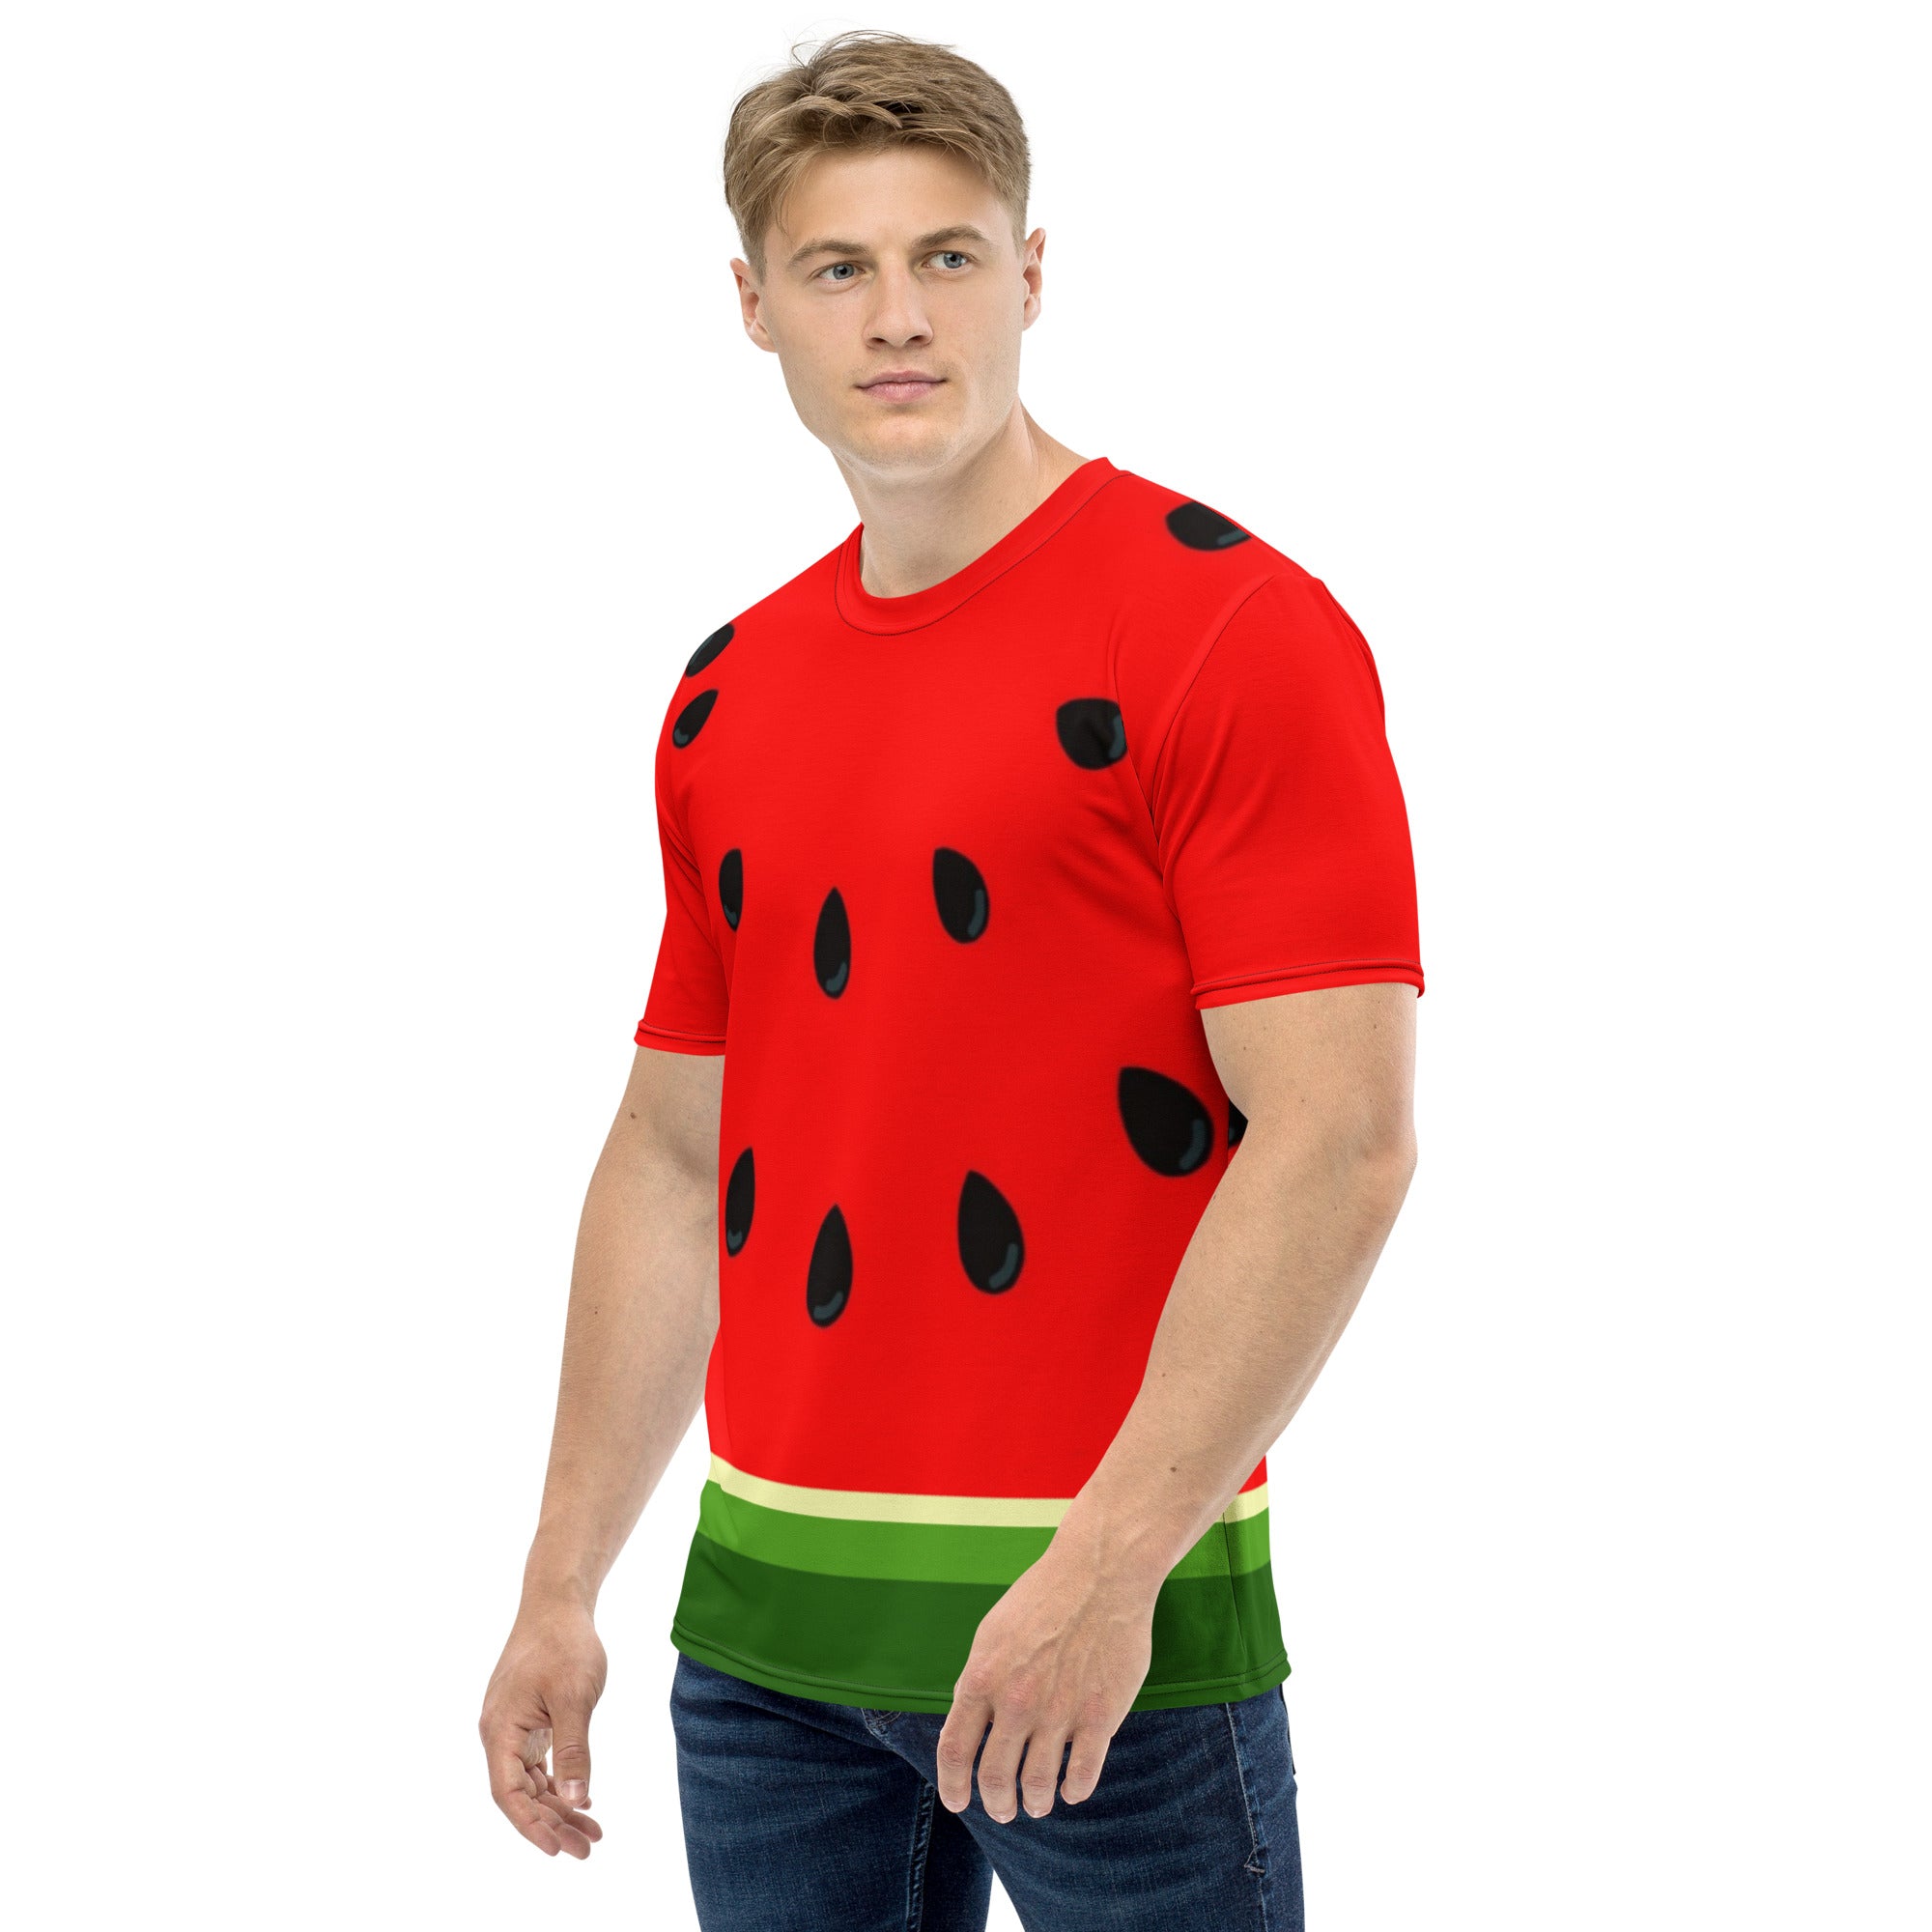 Watermelon Unisex T-shirt